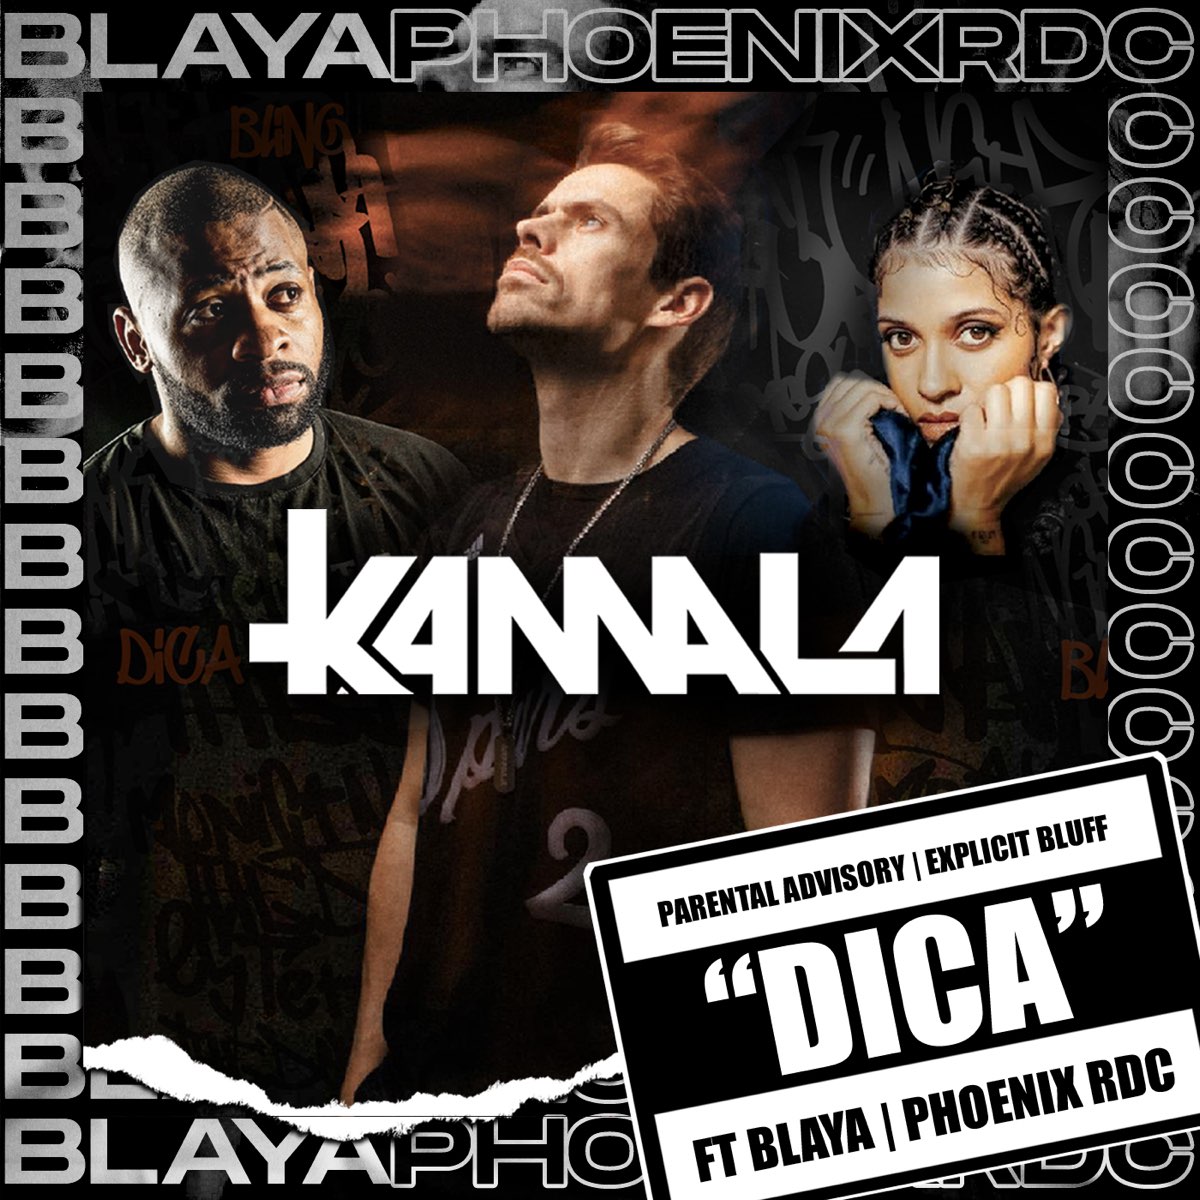 Dica Feat Blaya Phoenix Rdc Single Von Kamala Bei Apple Music